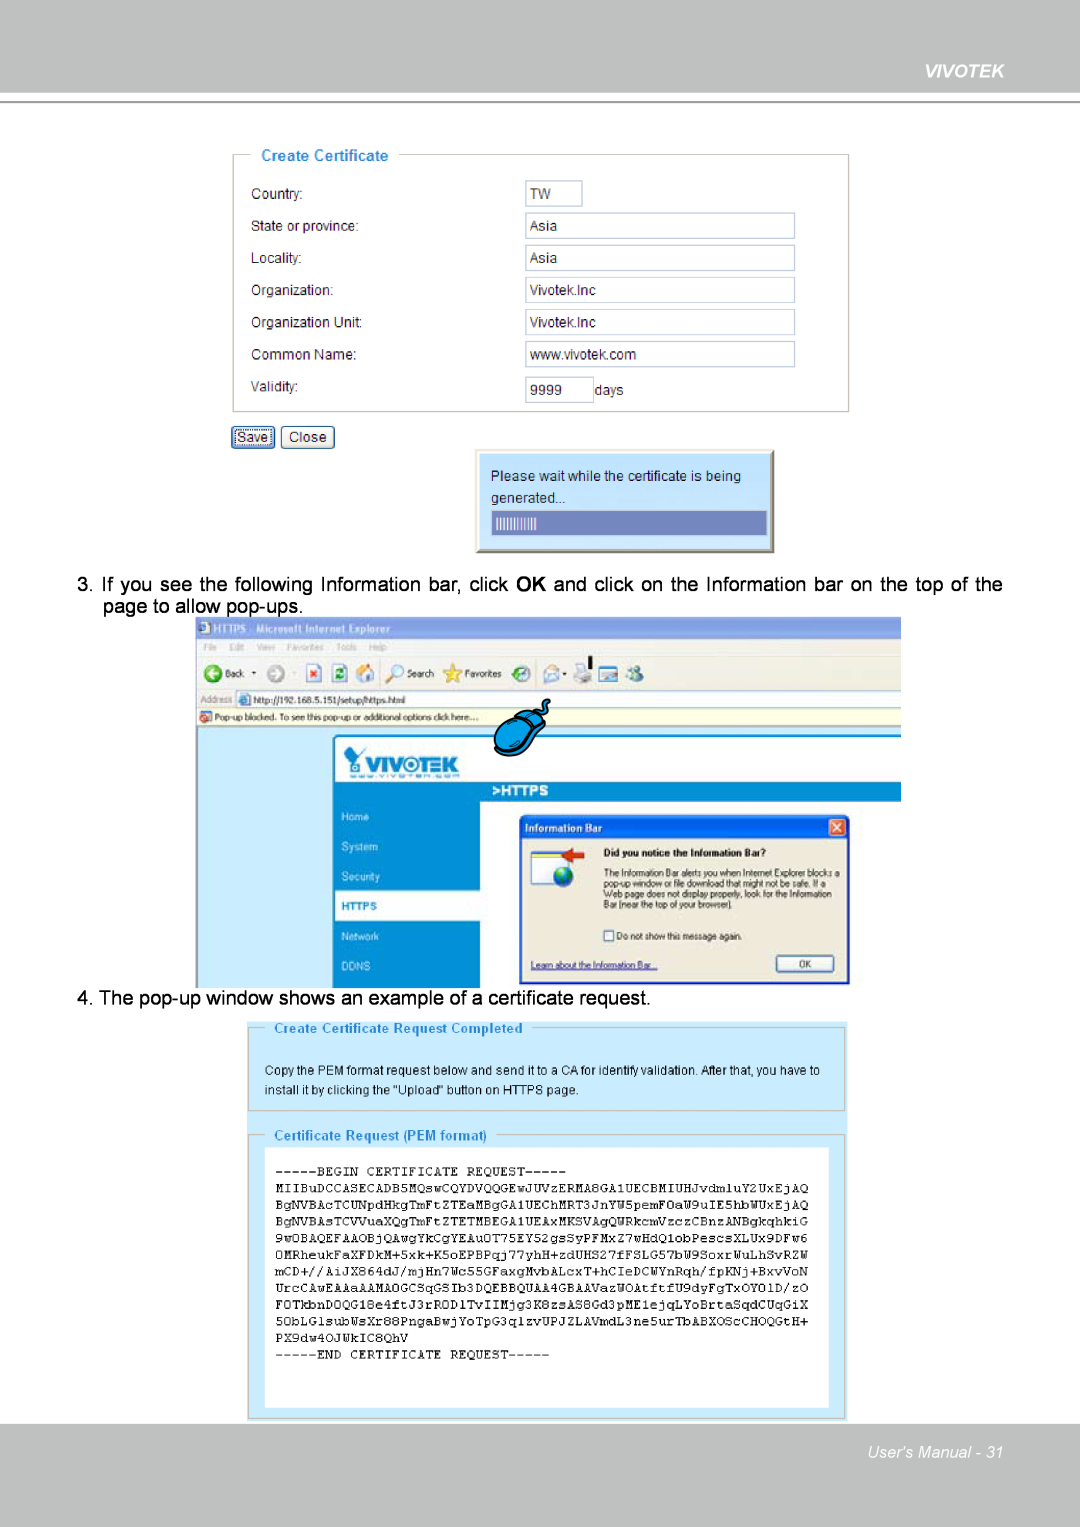 Vivotek PZ7132 manual The pop-up window shows an example of a certificate request, Vivotek, Users Manual 